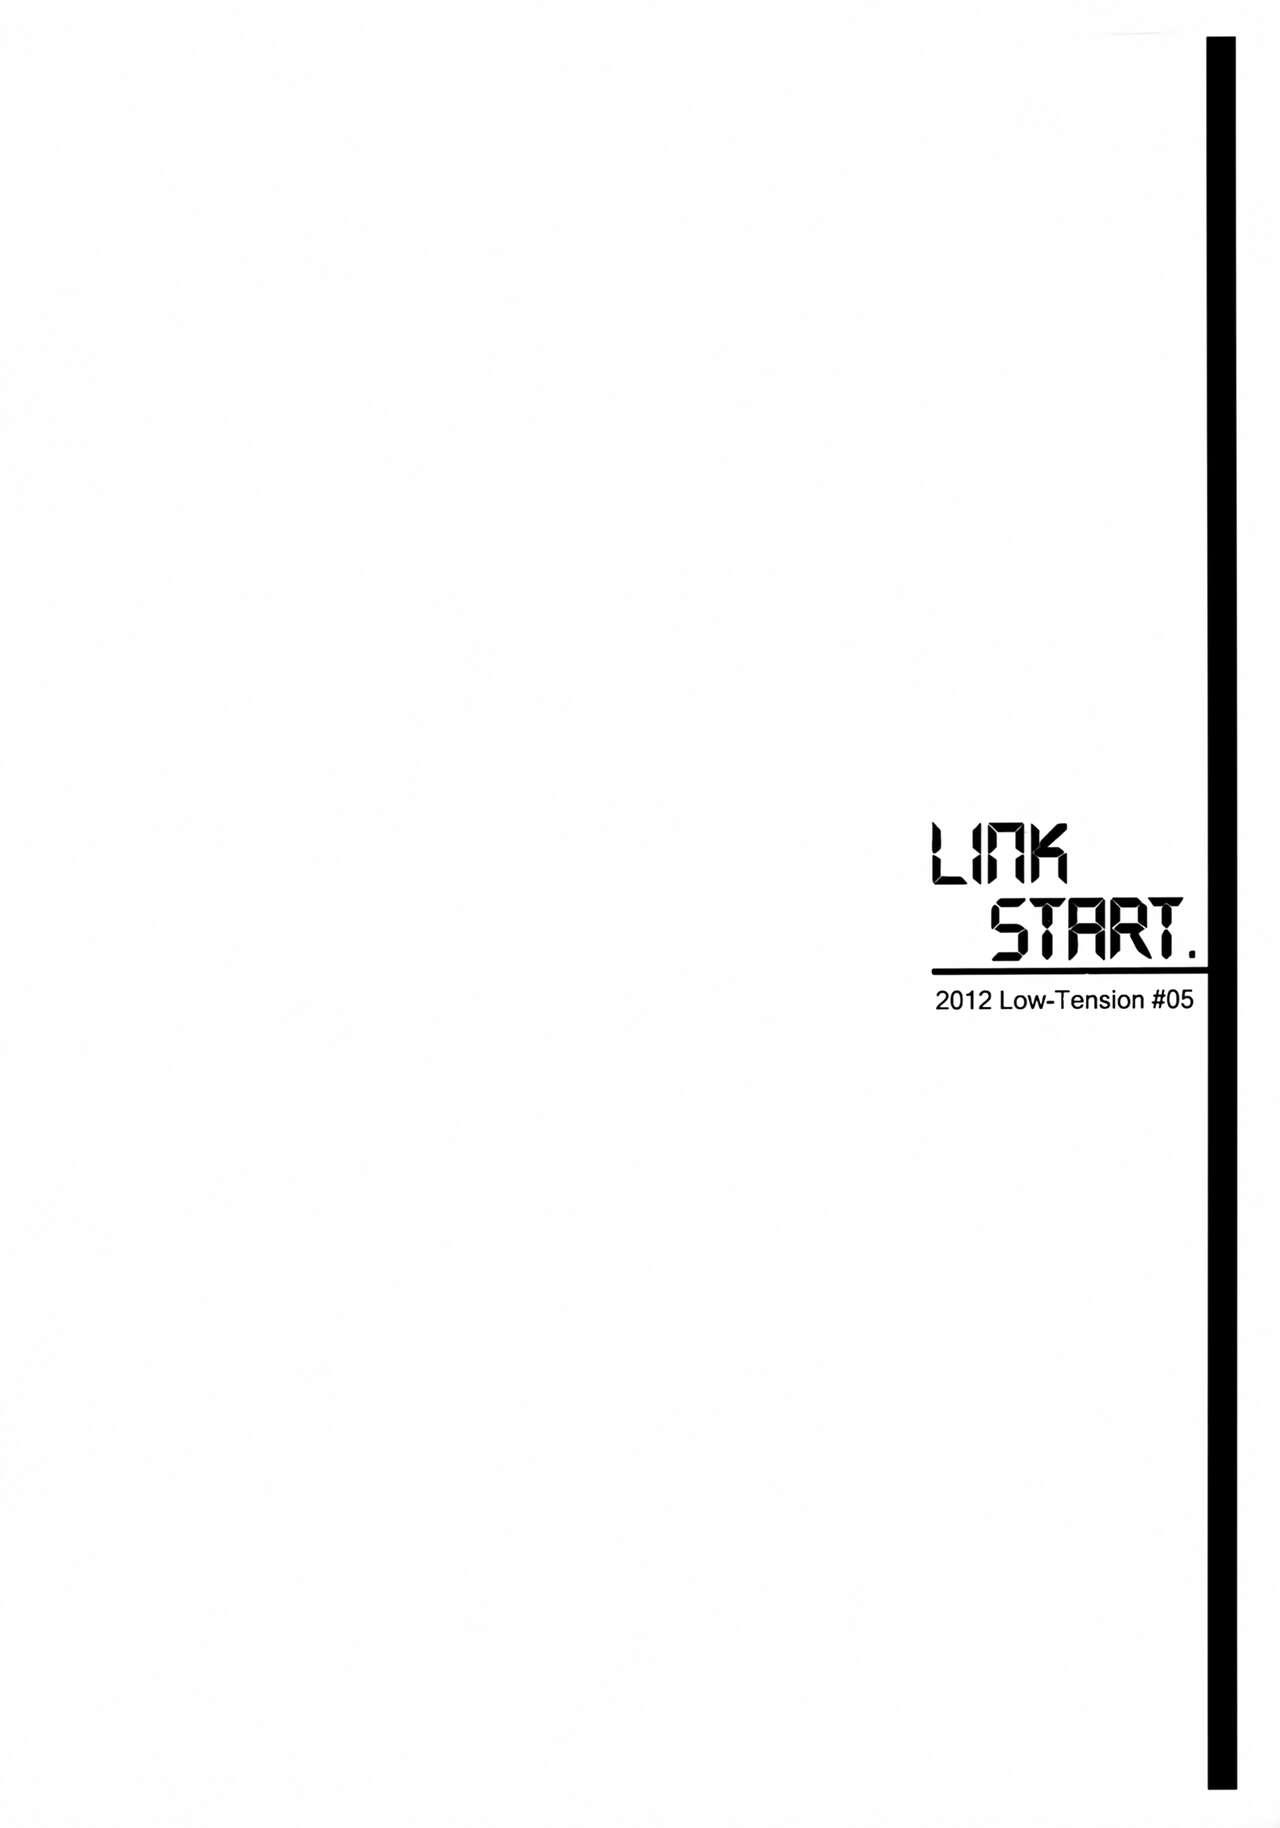 LINK START. 11